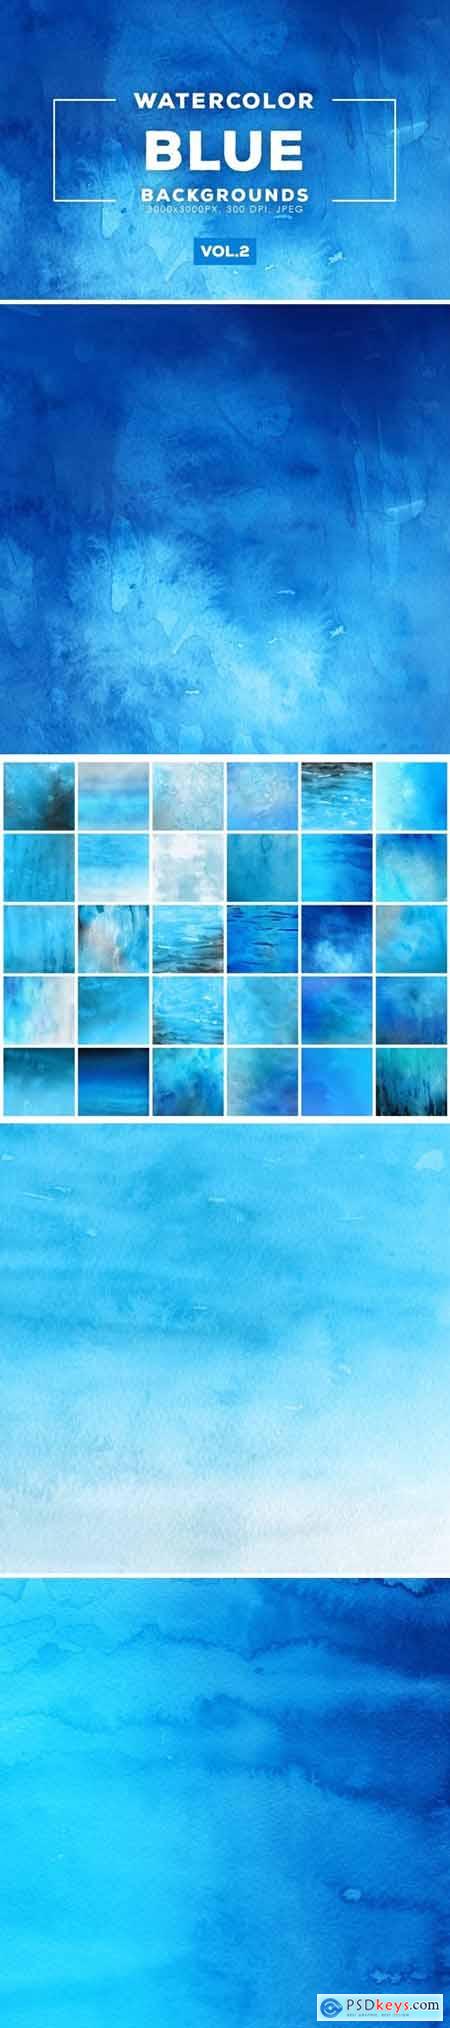 Watercolor Blue Backgrounds Vol.2